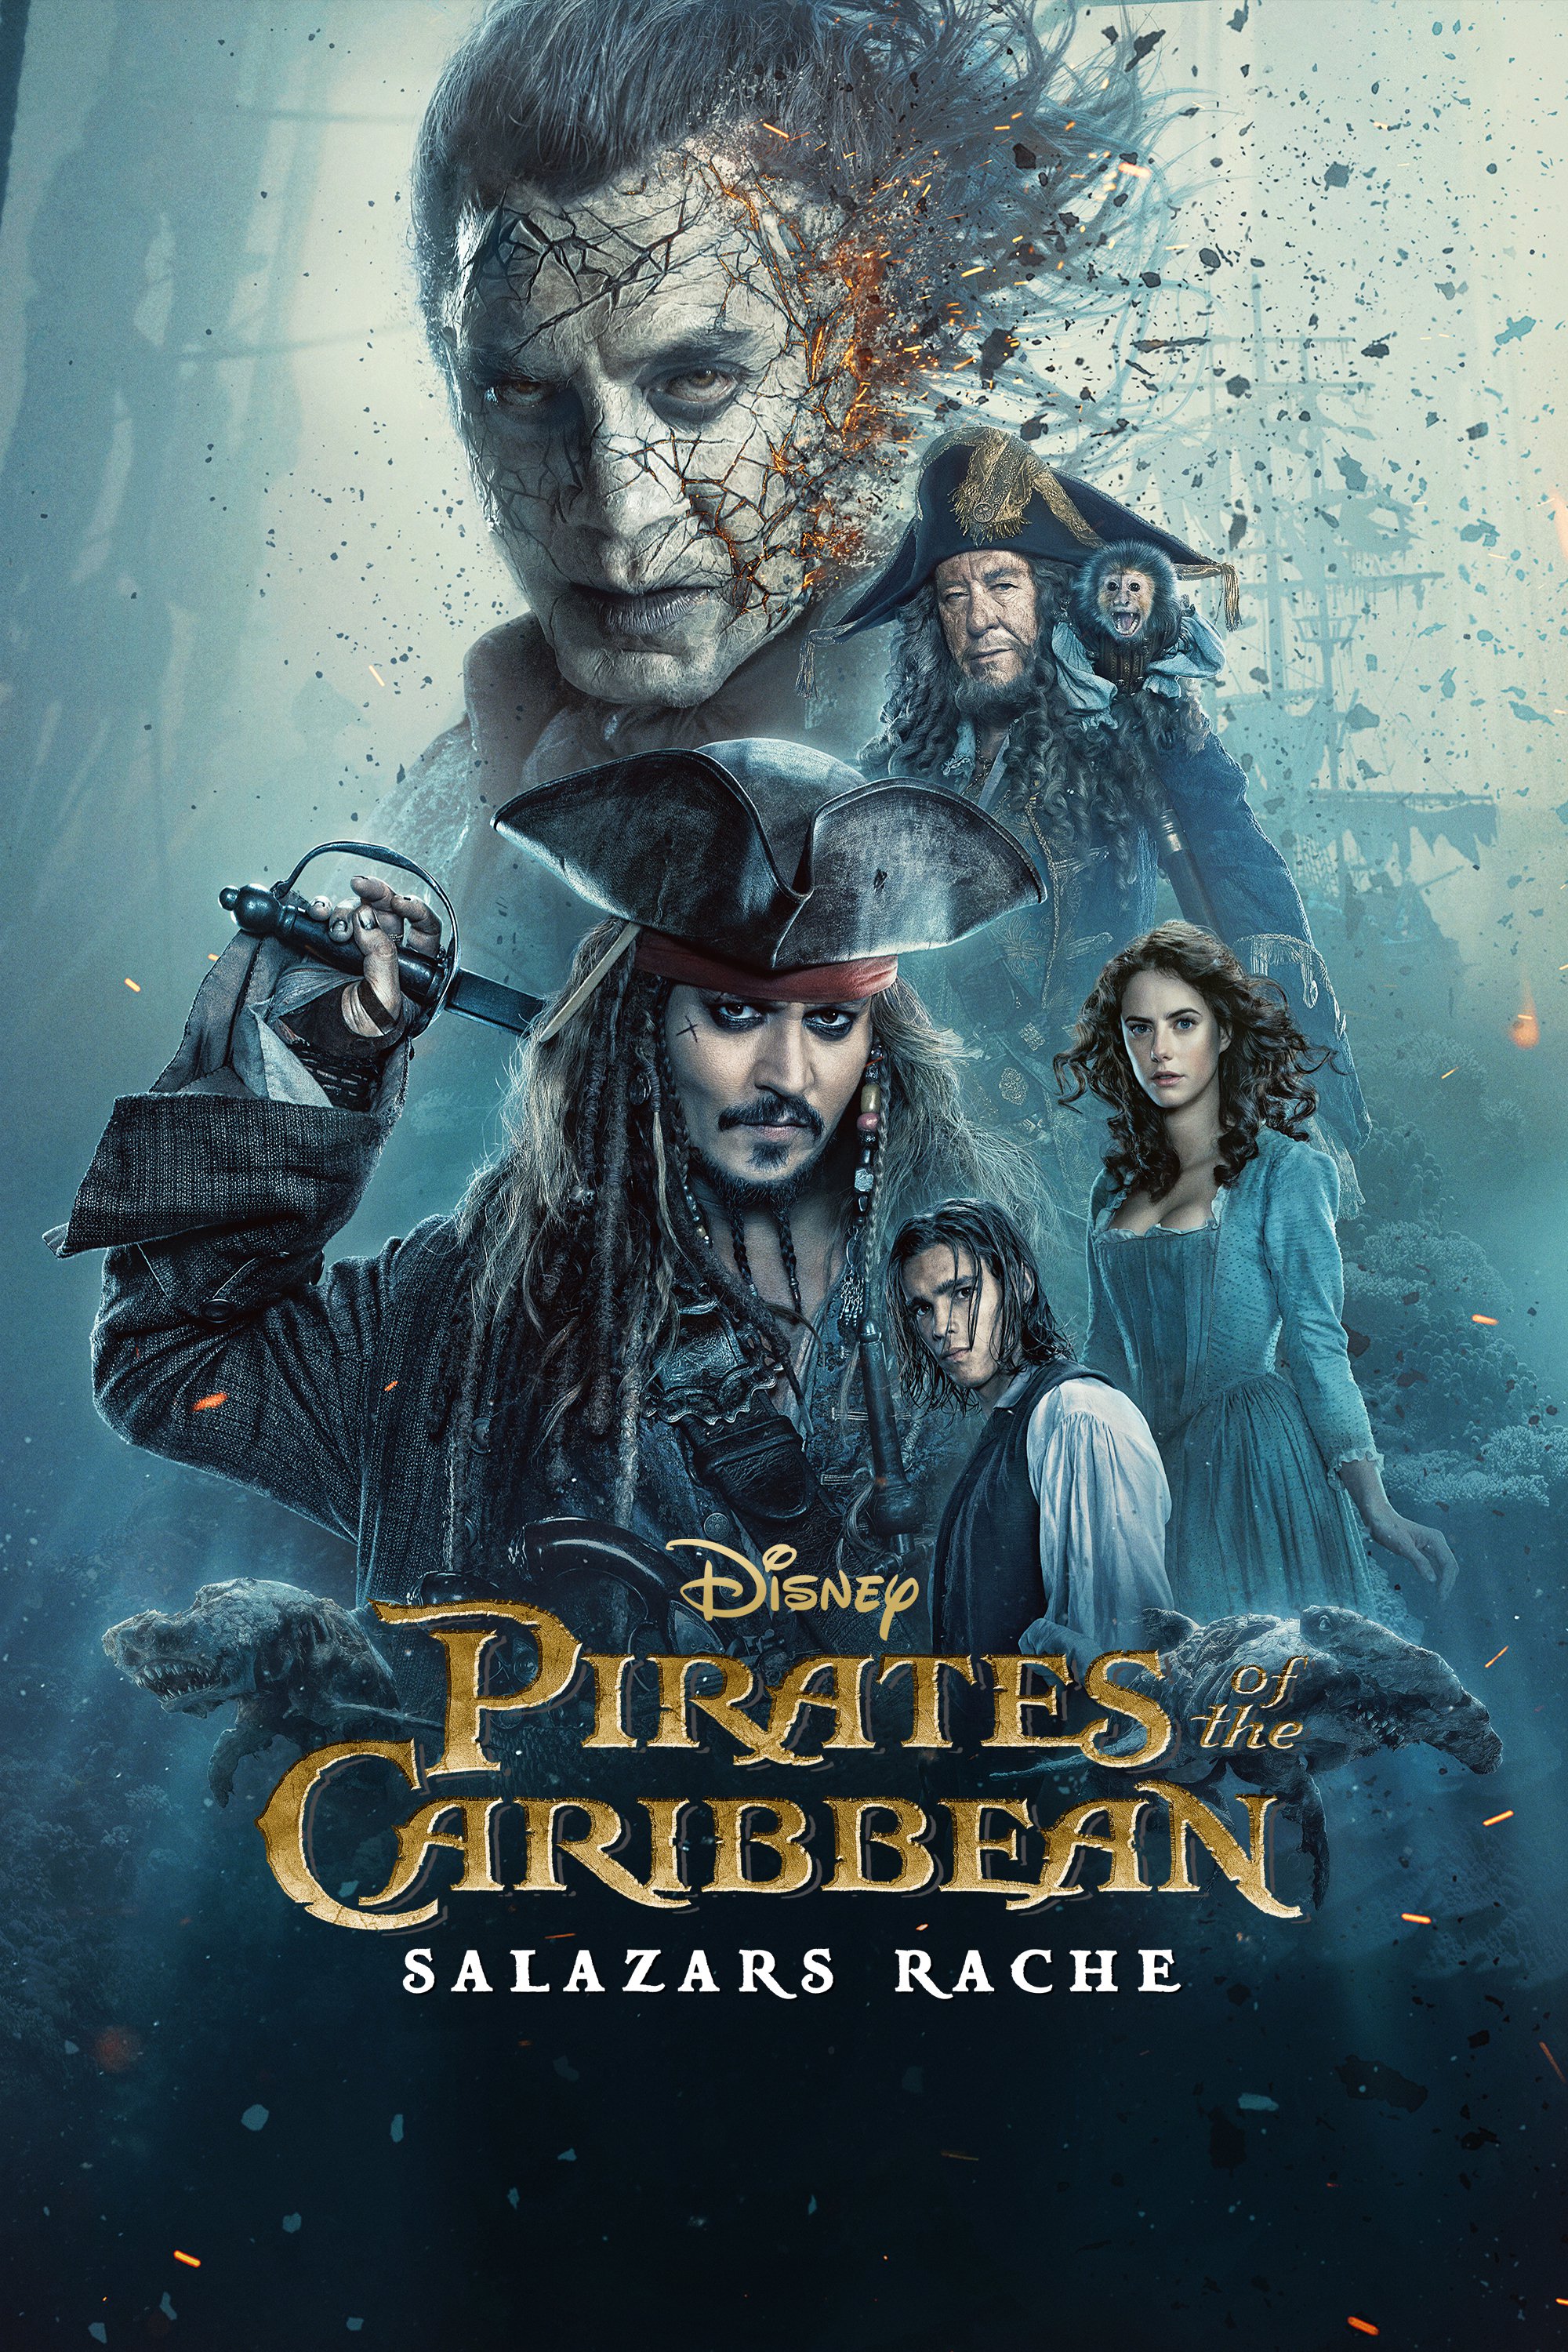 Plakat von "Pirates of the Caribbean: Salazars Rache"